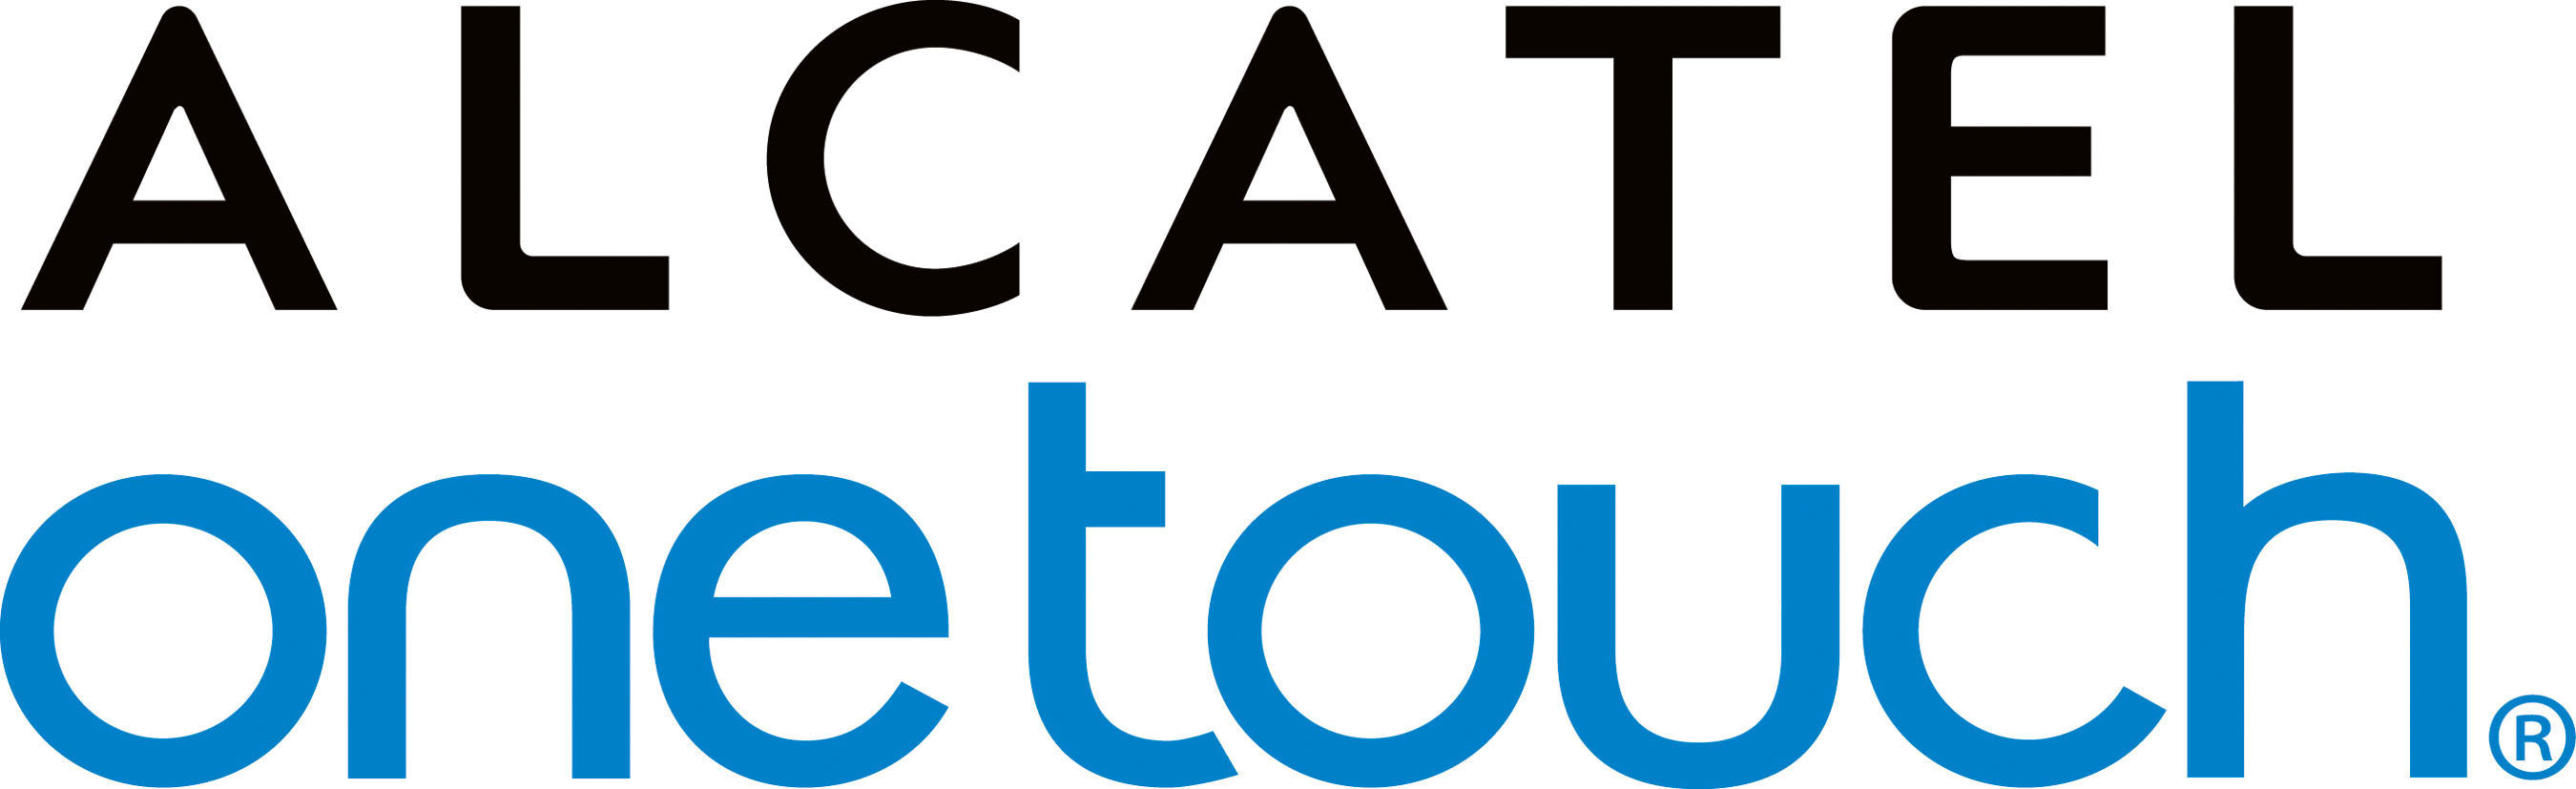 ALCATEL ONETOUCH Logo